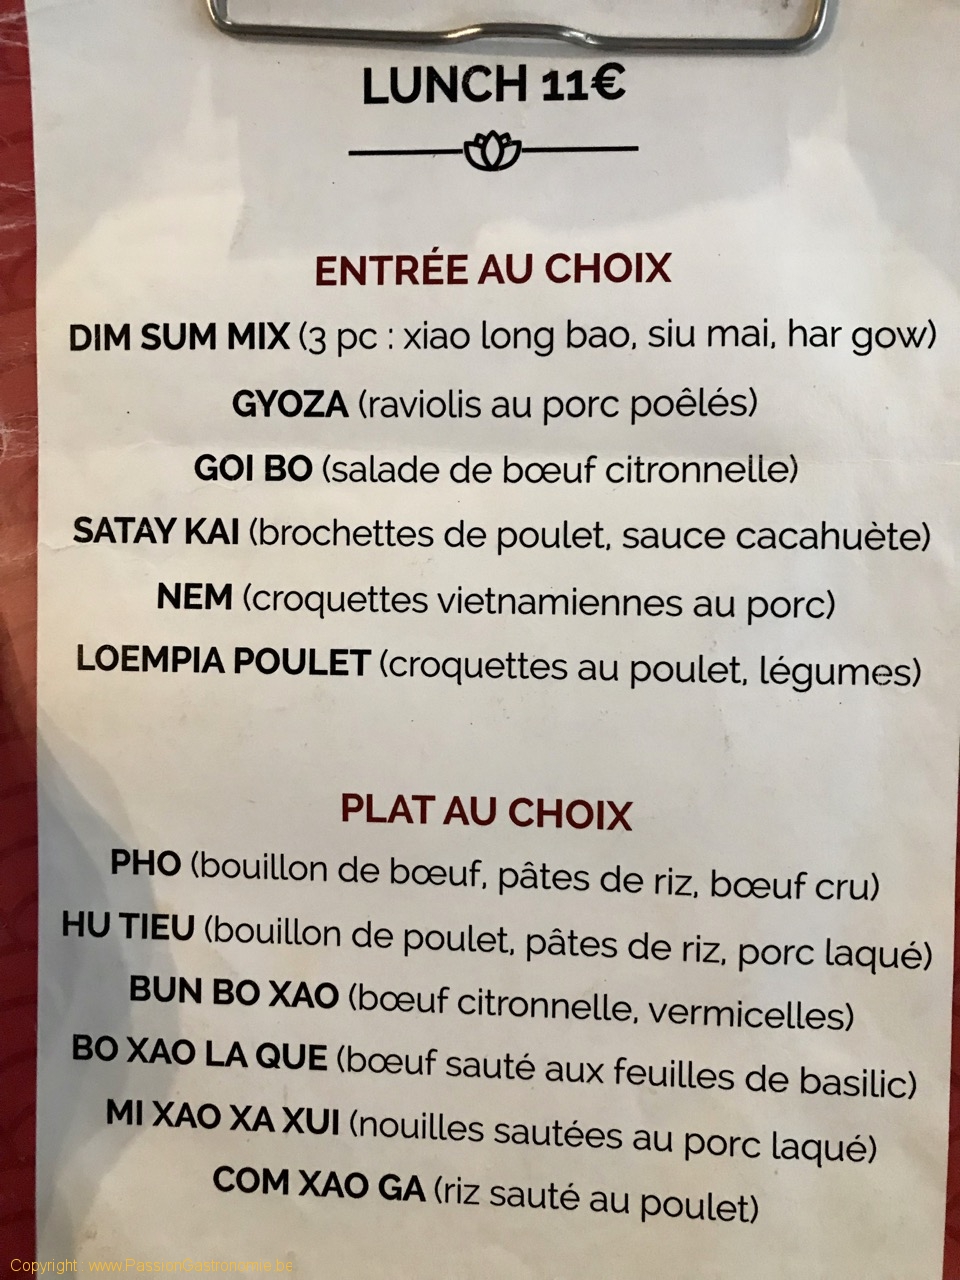 Restaurant Yi Chan - La carte du lunch